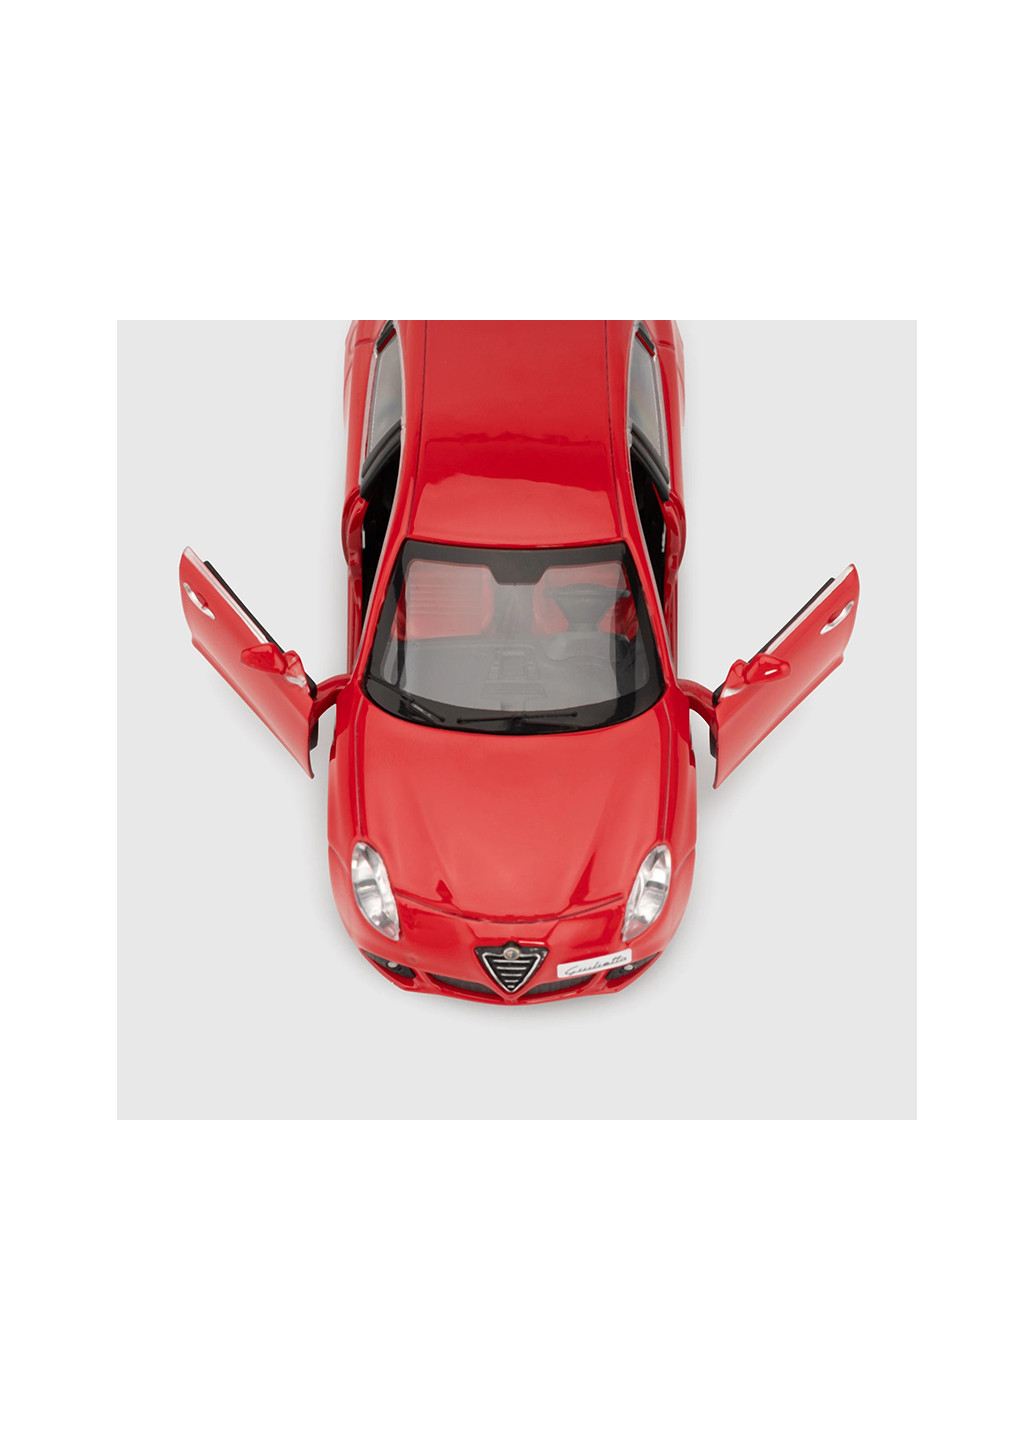 Іграшка Машина Alfa Romeo Giulietta 68315 АВТОПРОМ (263429096)